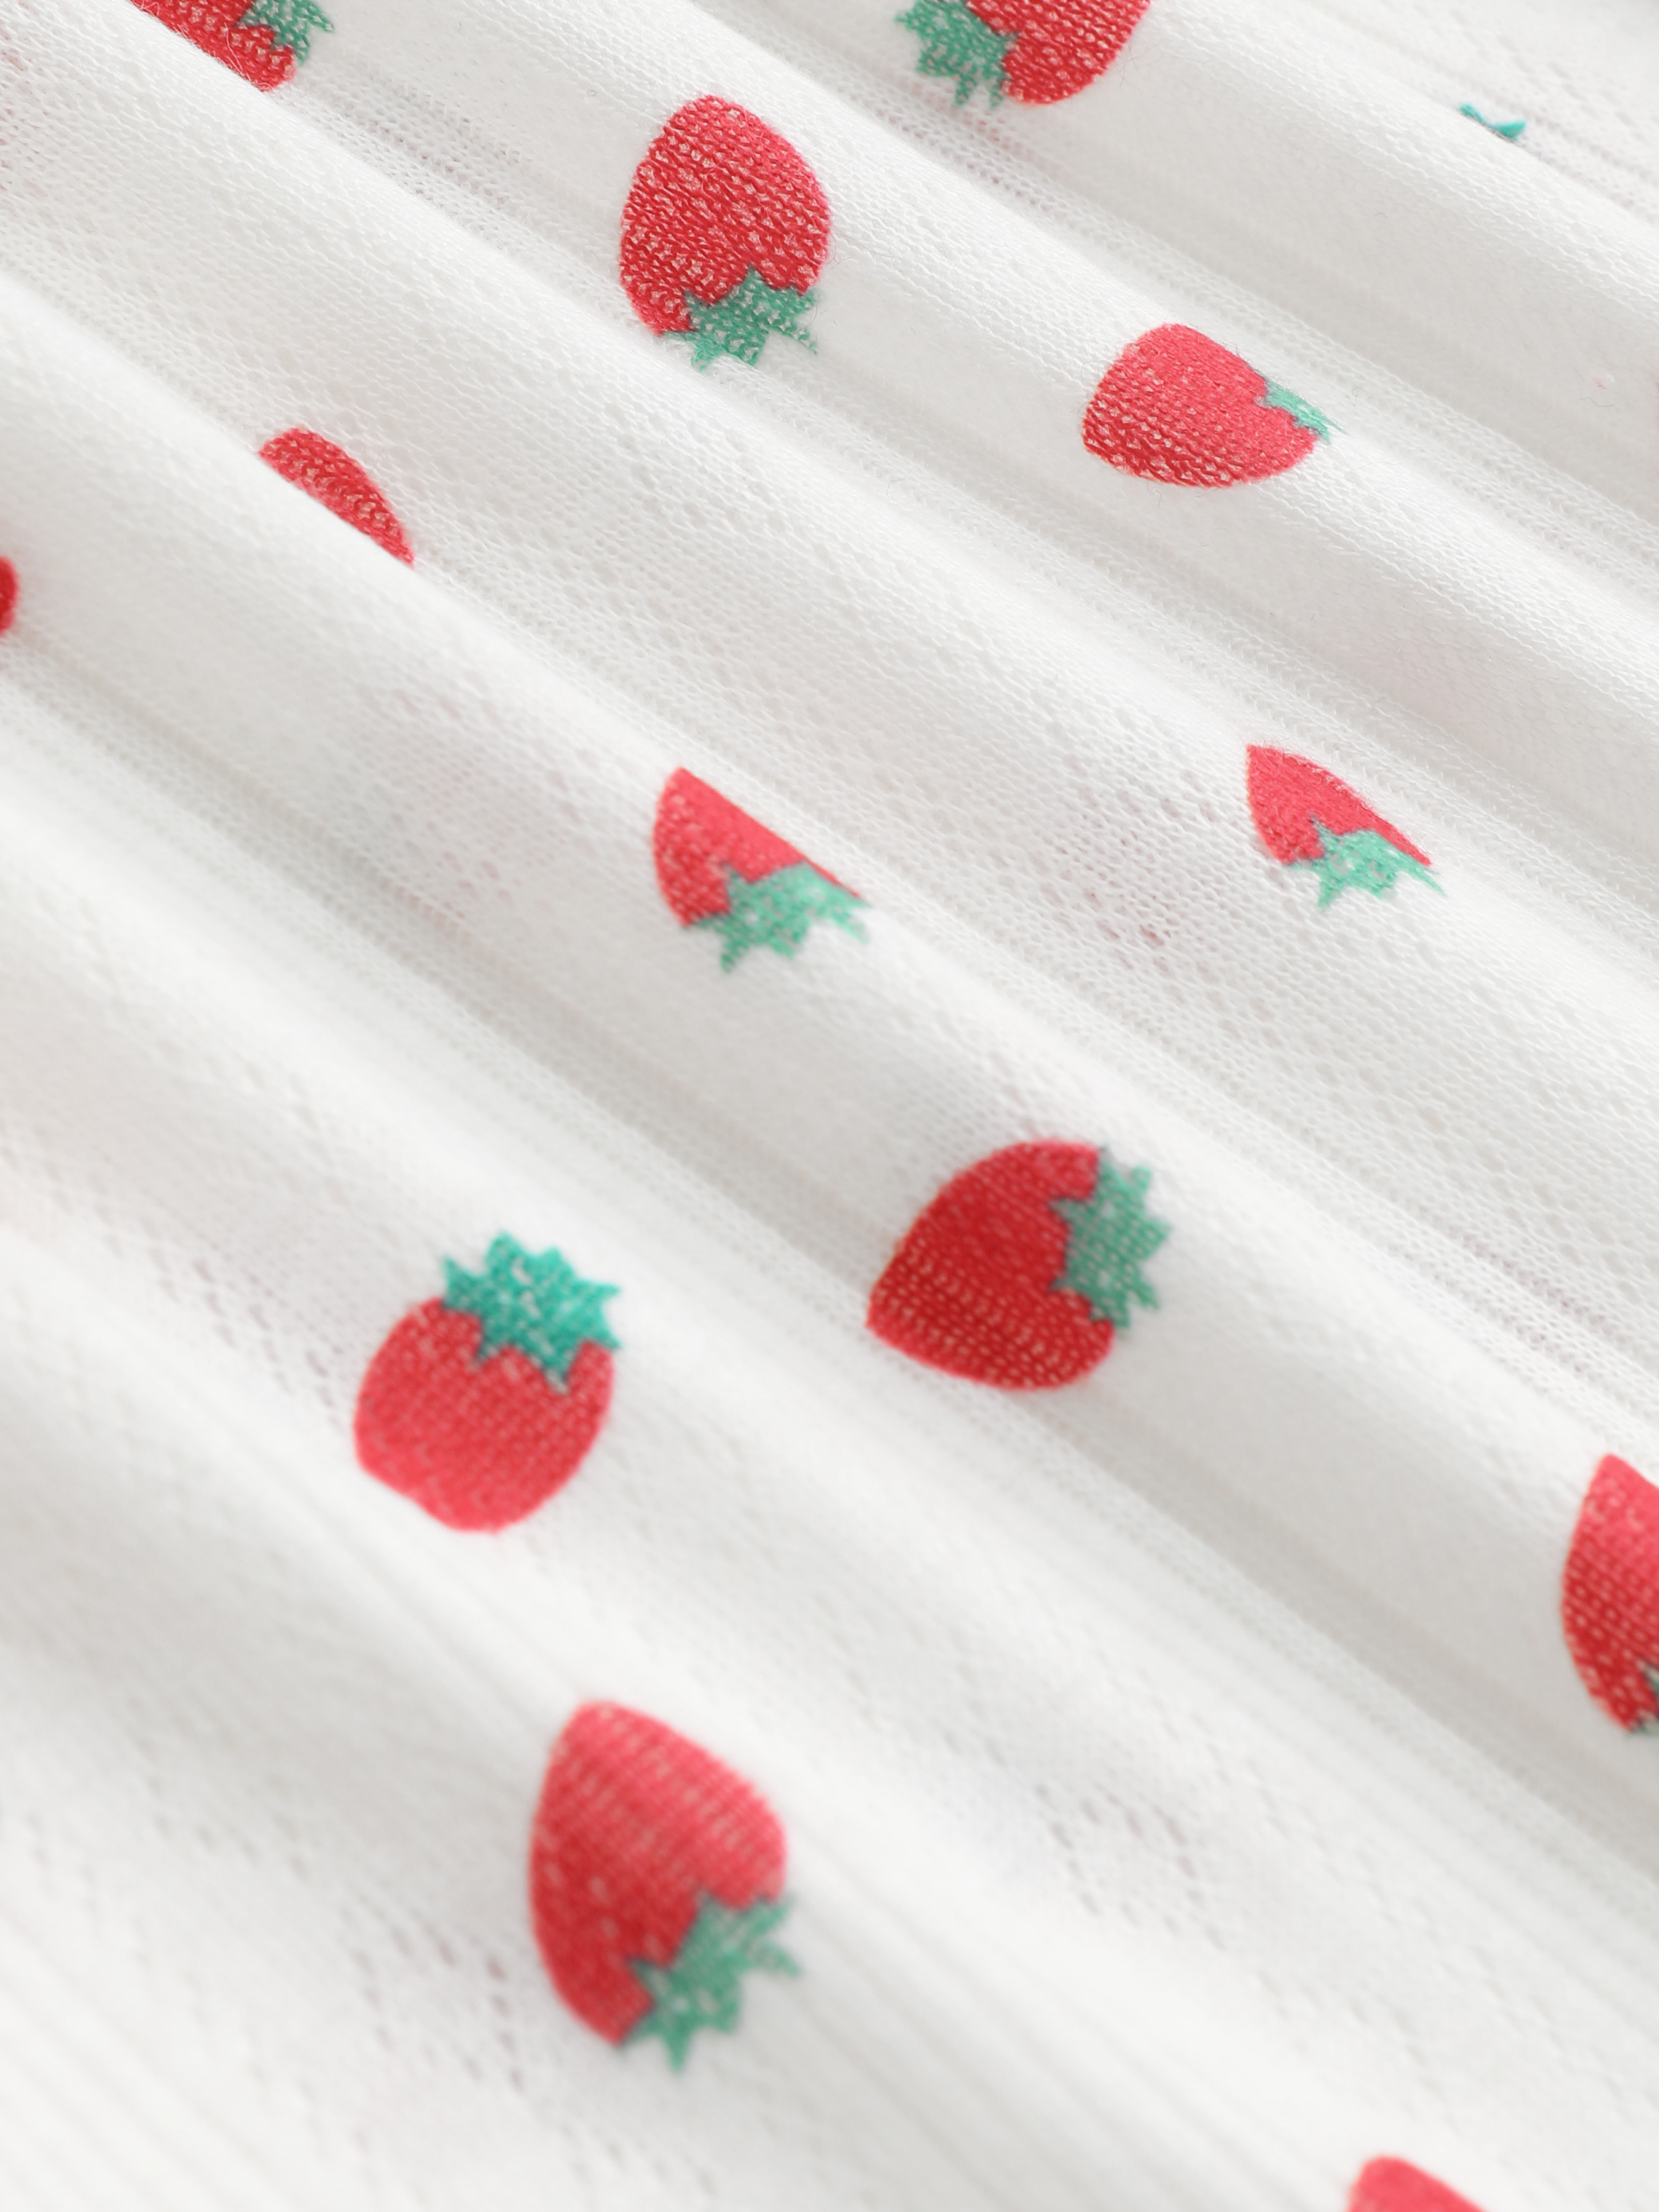 Strawberry Print Knotted Tank Top & High Waist Shorts Pajama Set - Cider